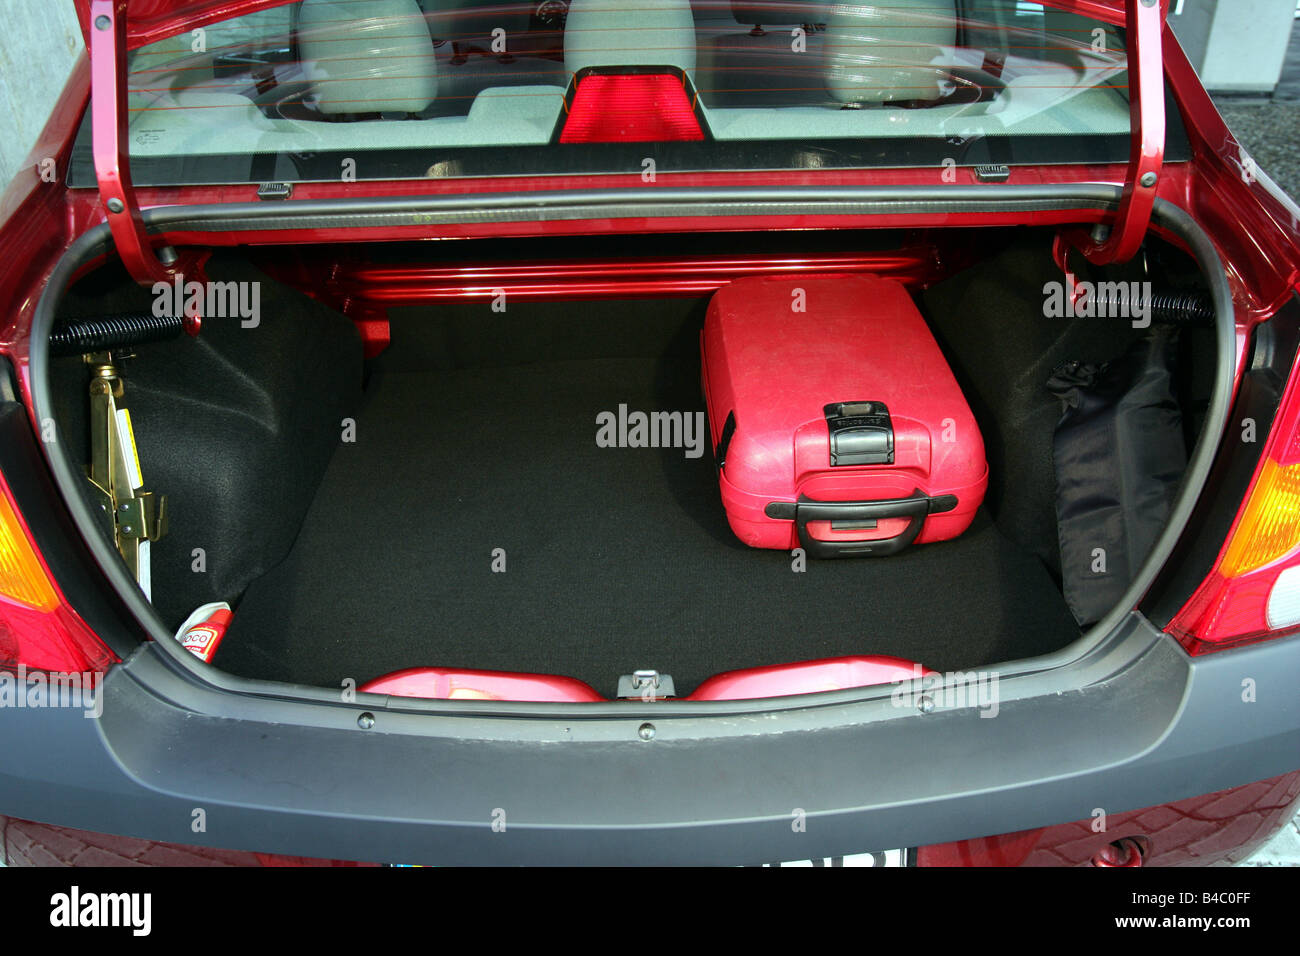 dacia - Alamy stock Car images and hi-res photography